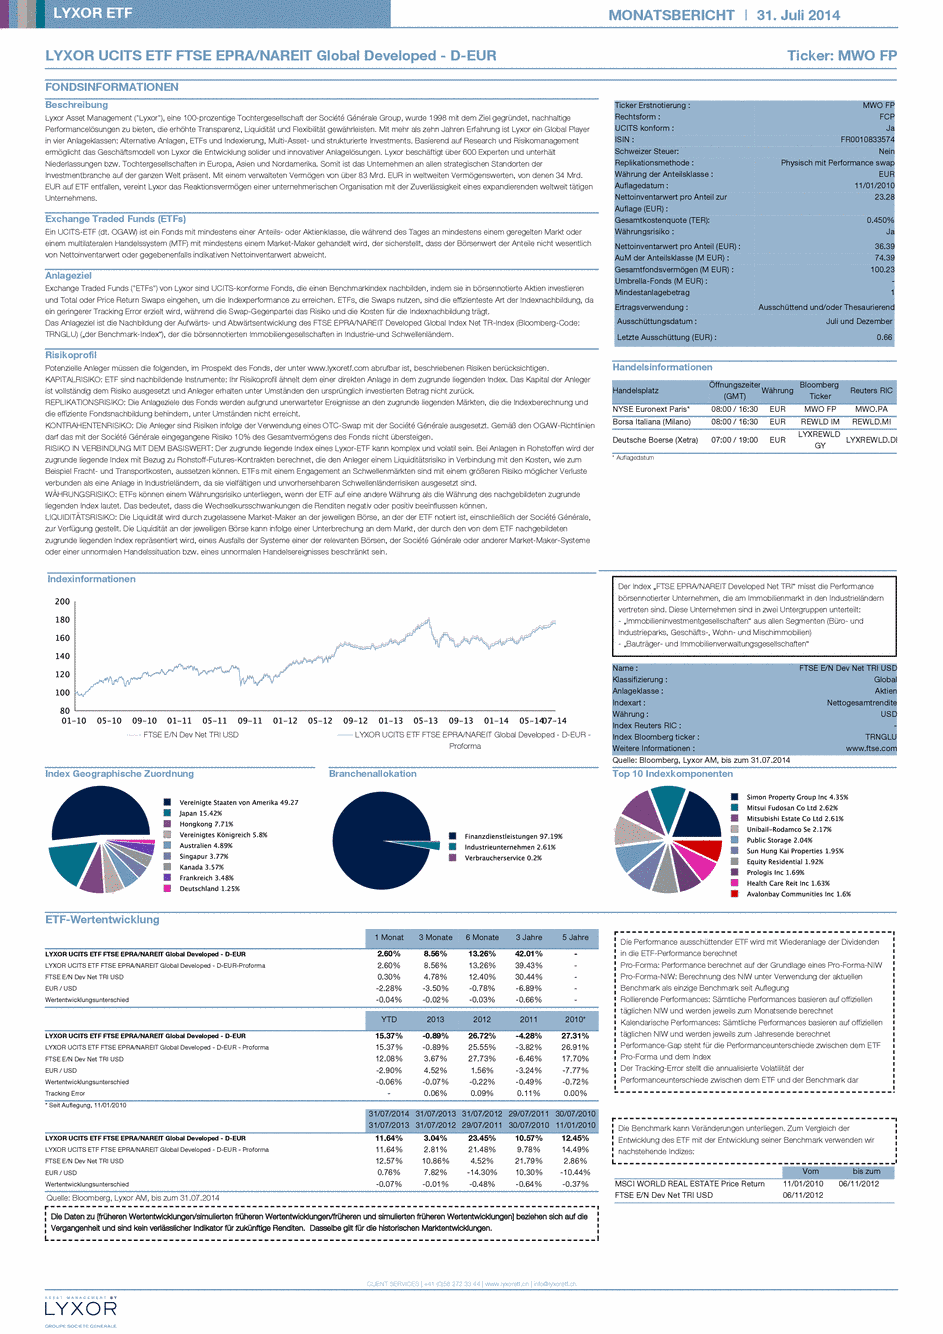 Reporting LYXOR FTSE EPRA/NAREIT Global Developed UCITS ETF - D-EUR - 31/07/2014 - Allemand